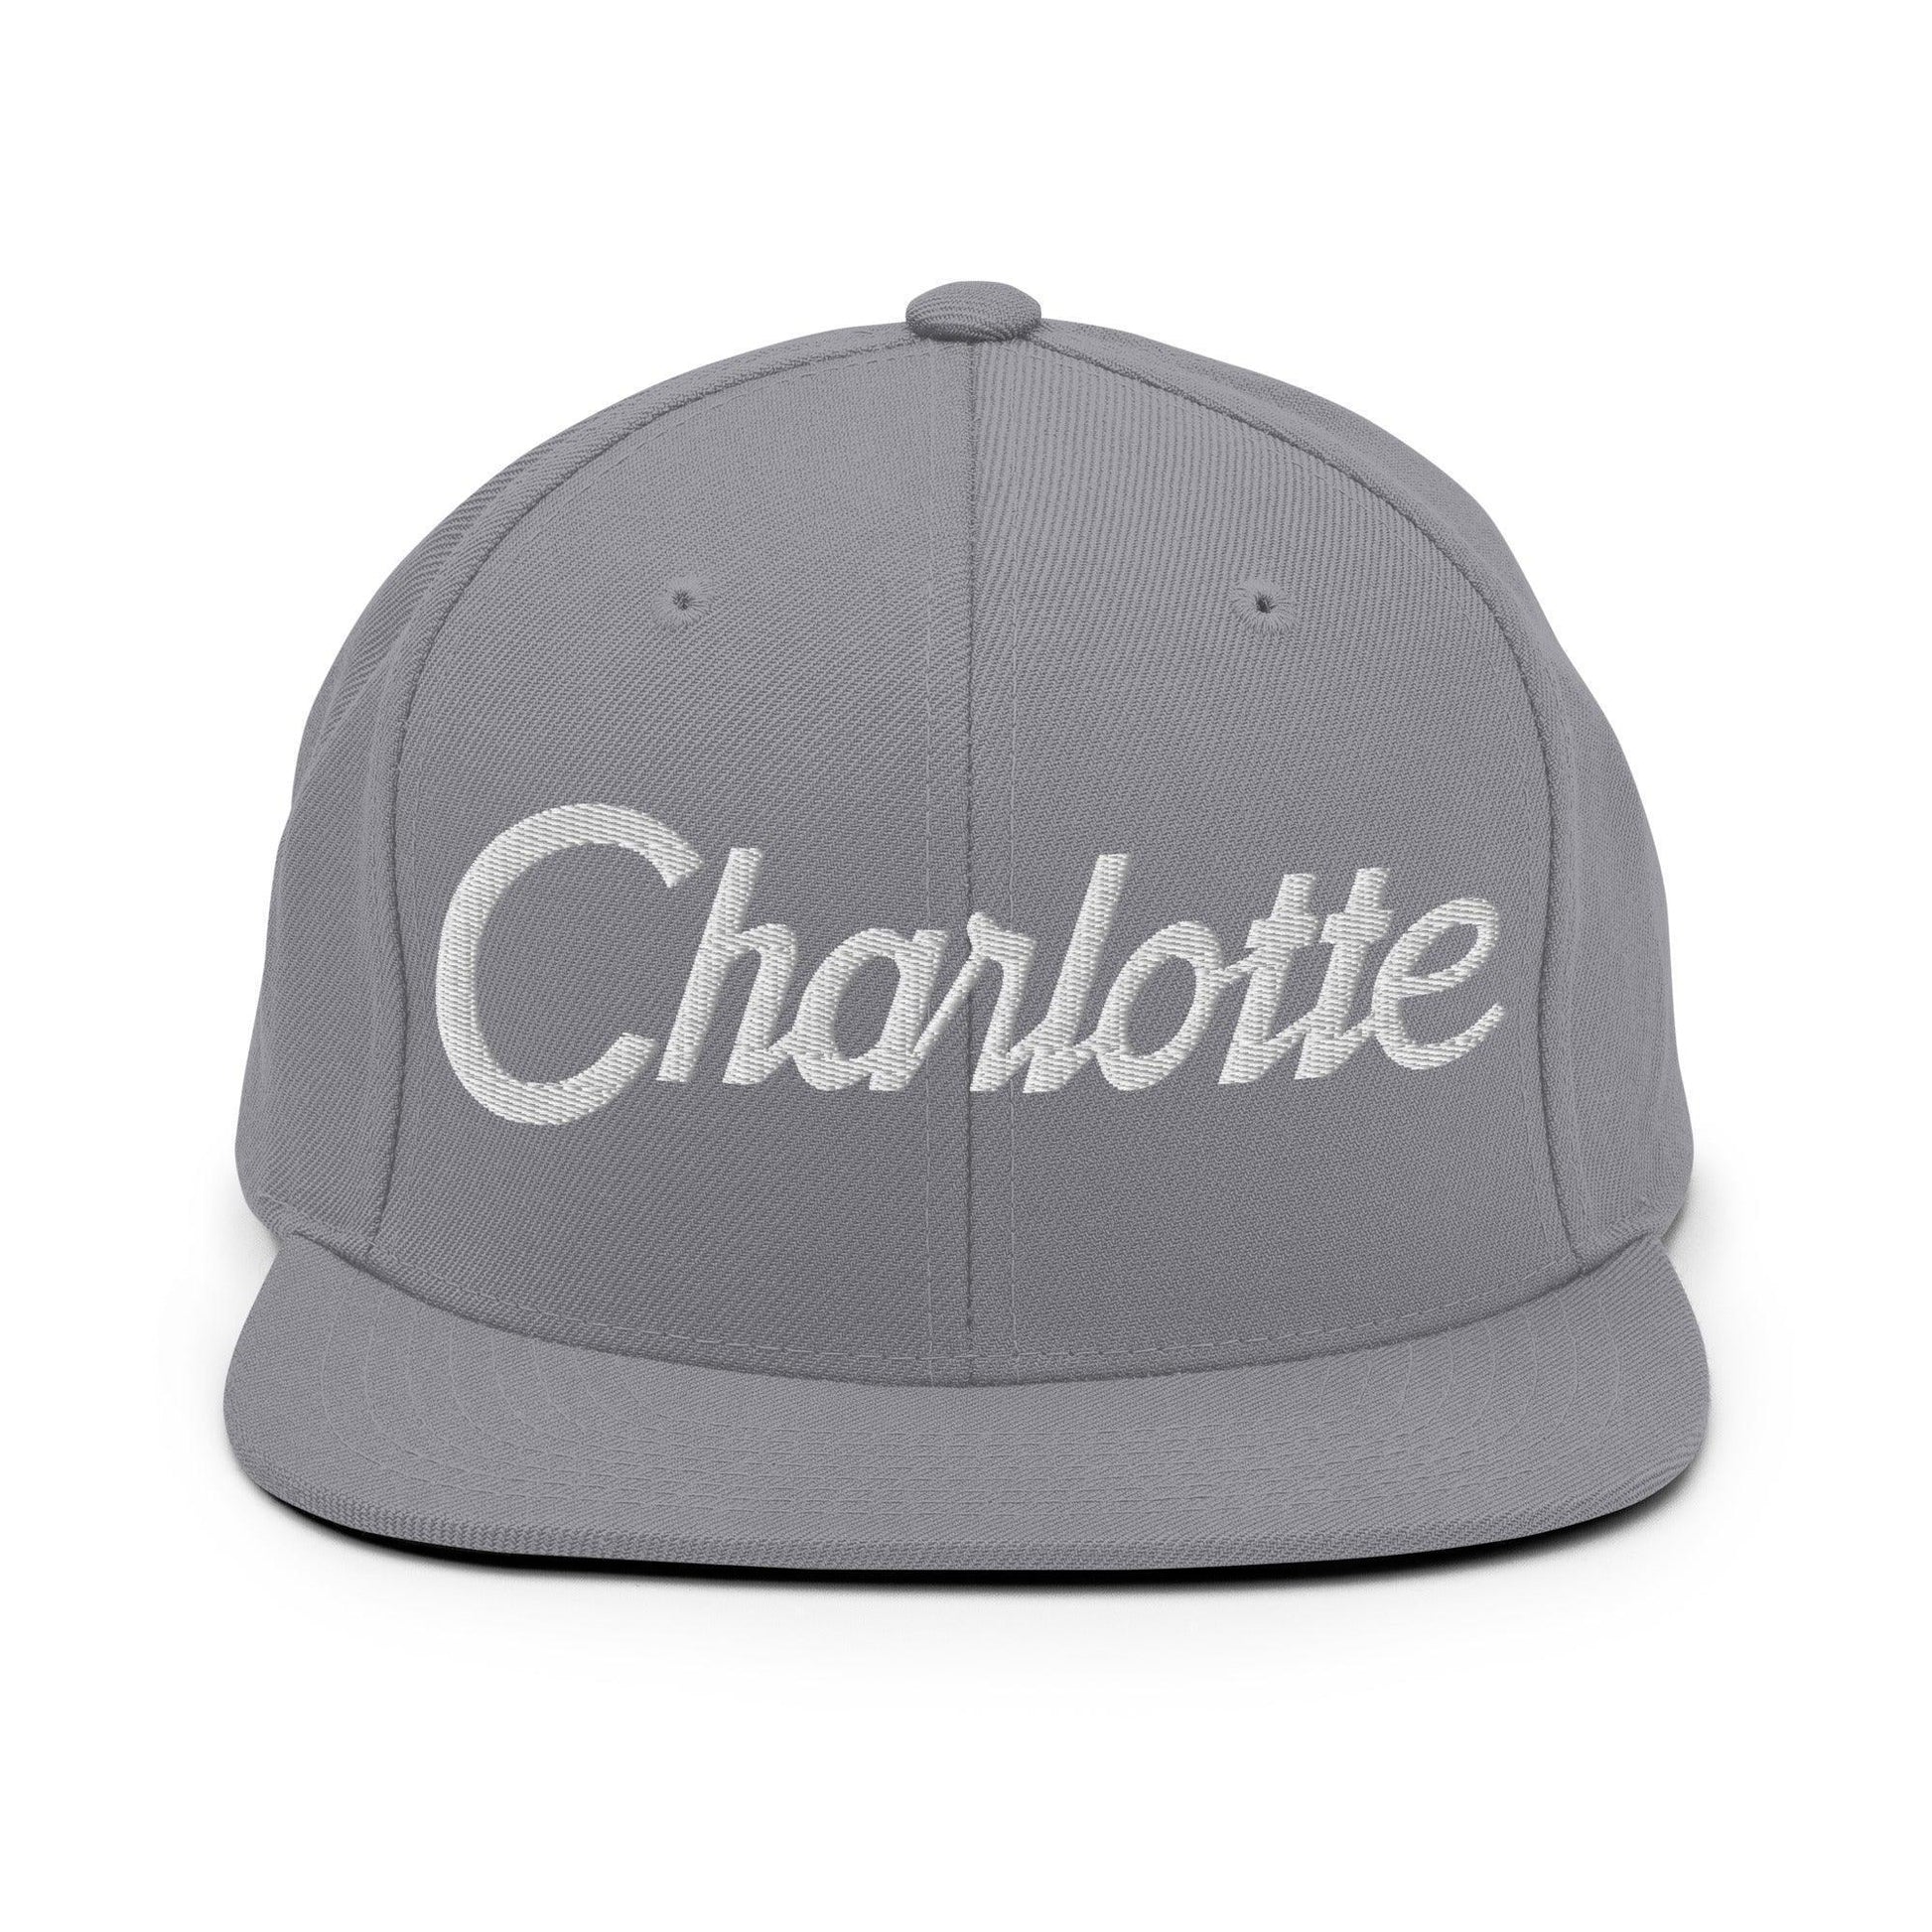 Charlotte Script Snapback Hat Silver